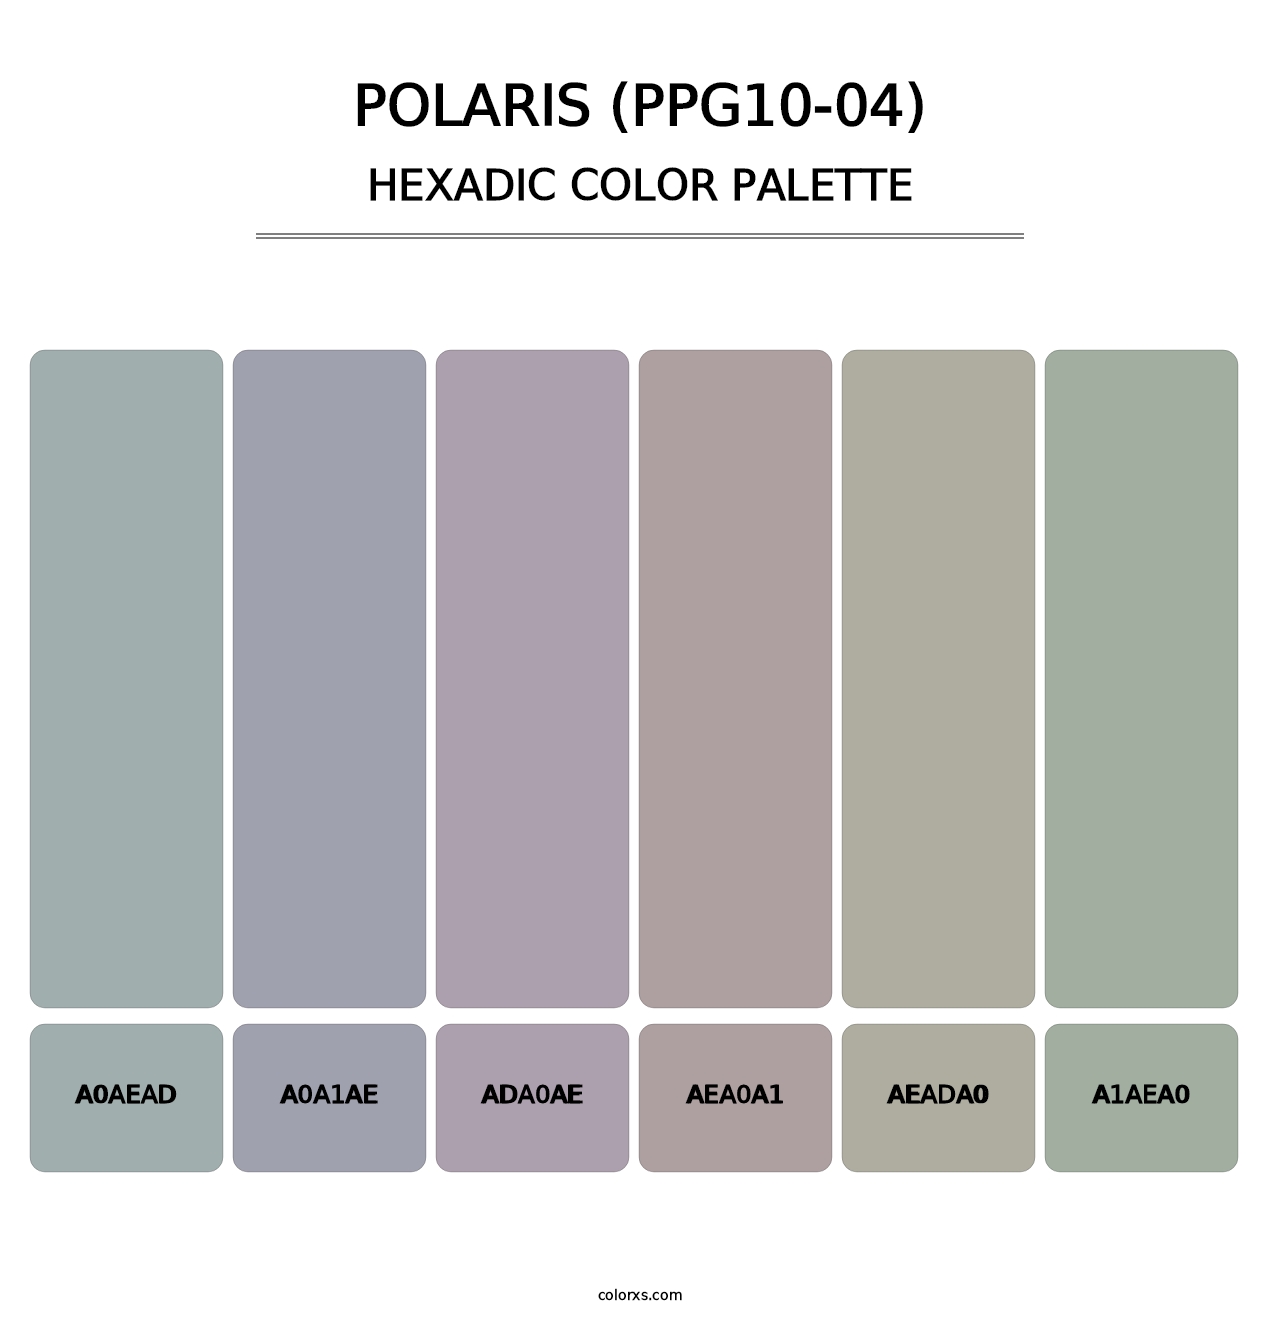 Polaris (PPG10-04) - Hexadic Color Palette